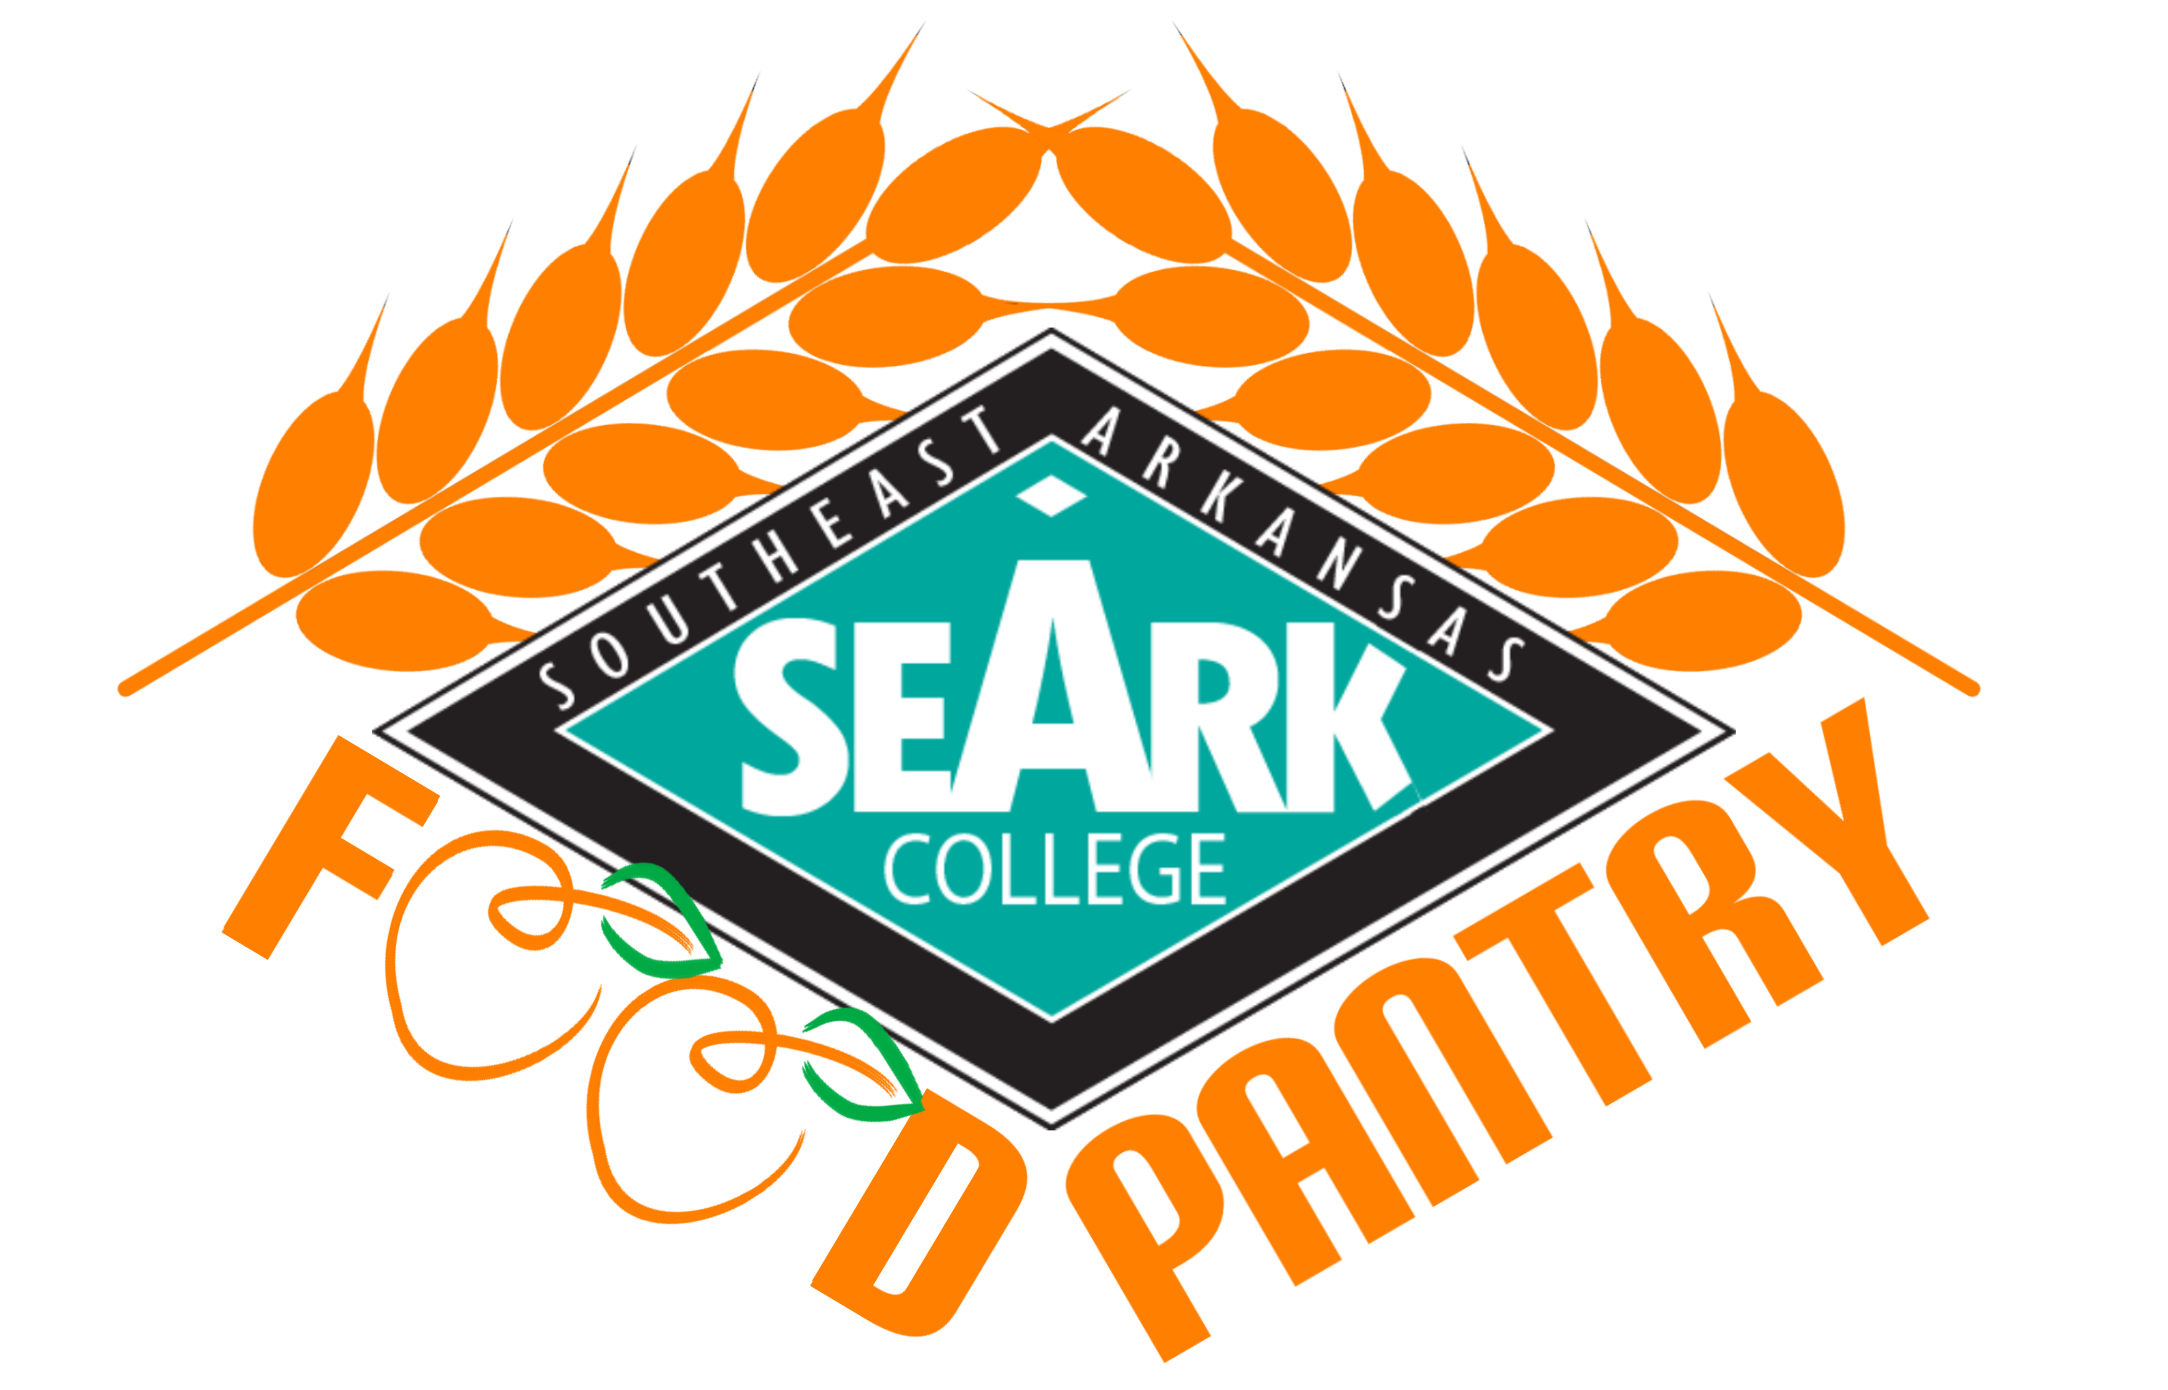 SEARK College food pantry logo